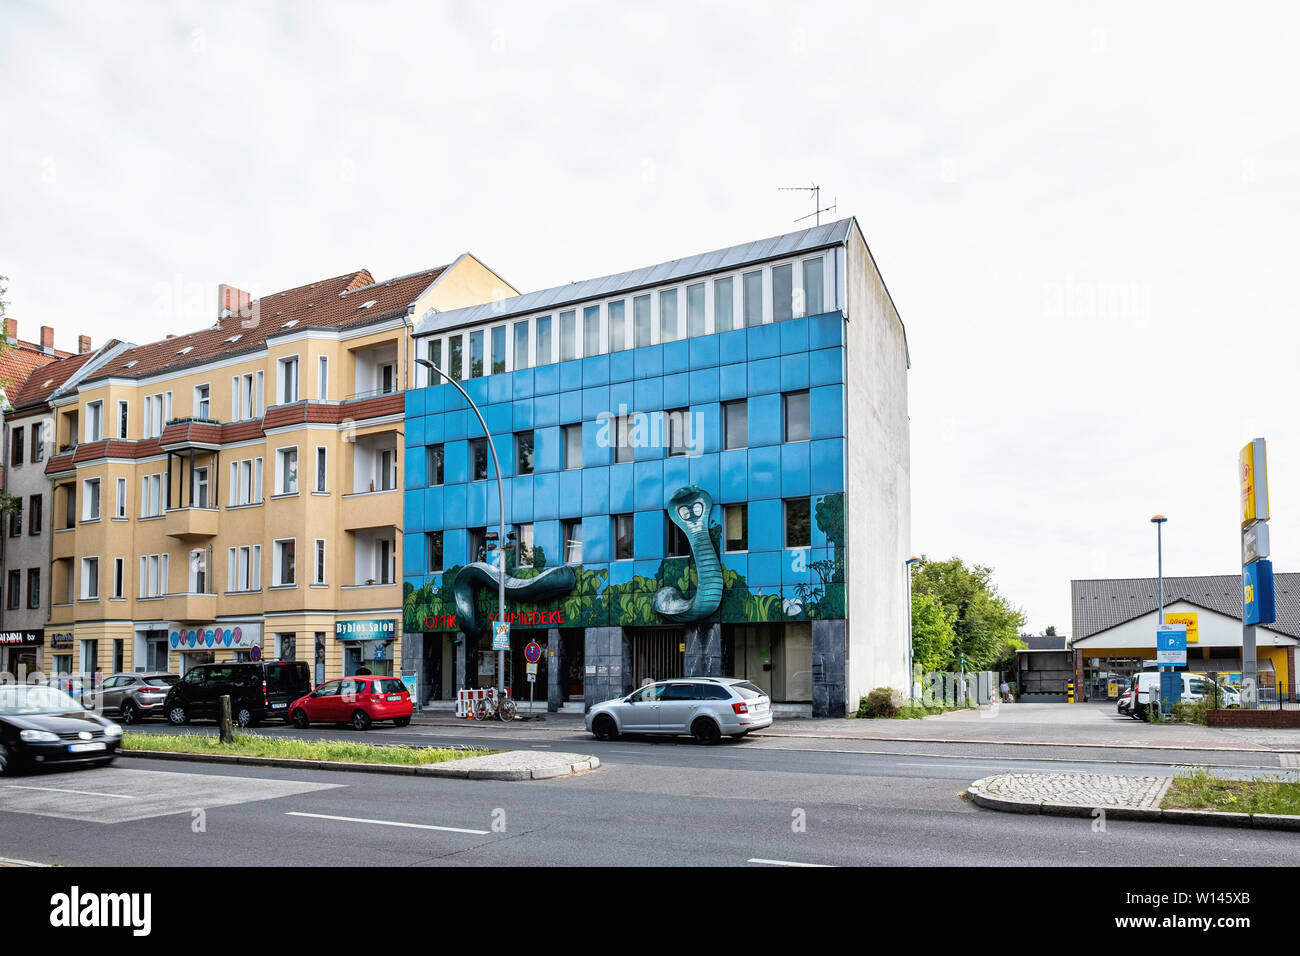 Schmiedeke Optik Optician in Blue building with 3-D snake on facade in Scharnweberstrasse, Reickenendorf-Berlin Stock Photo